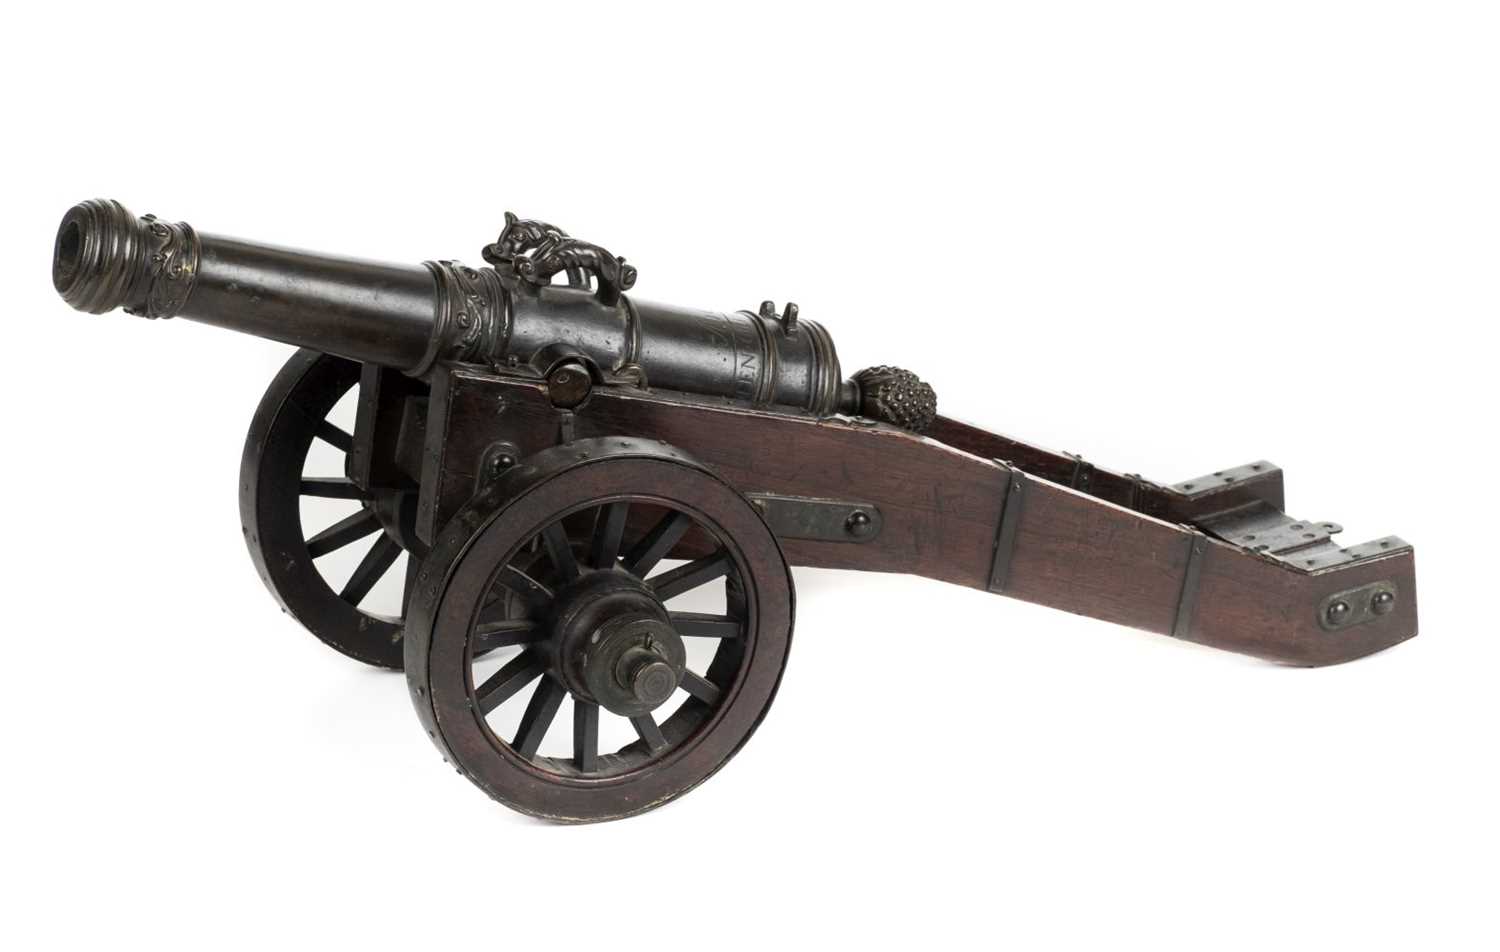 Lot 14 - Cannon. A 17th century Dutch signal cannon